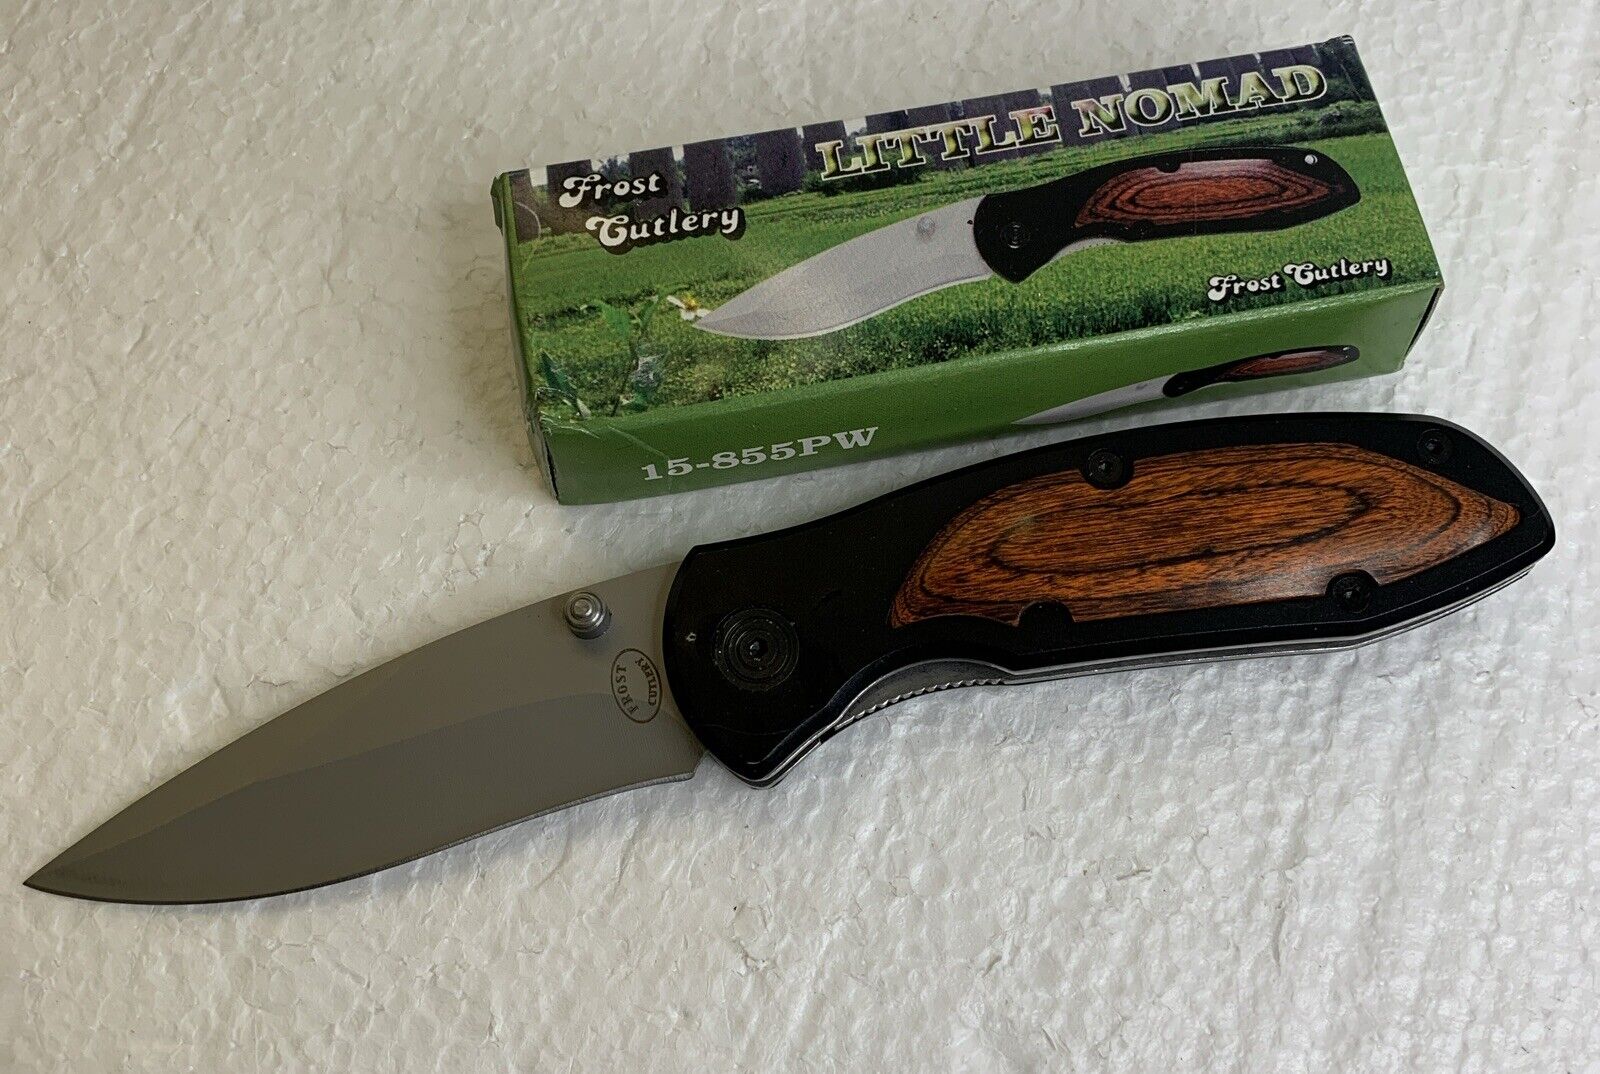 Frost Cutlery Little Nomad Brown Pakkawood Linerlock Pocket Knife 15-855PW~NEW